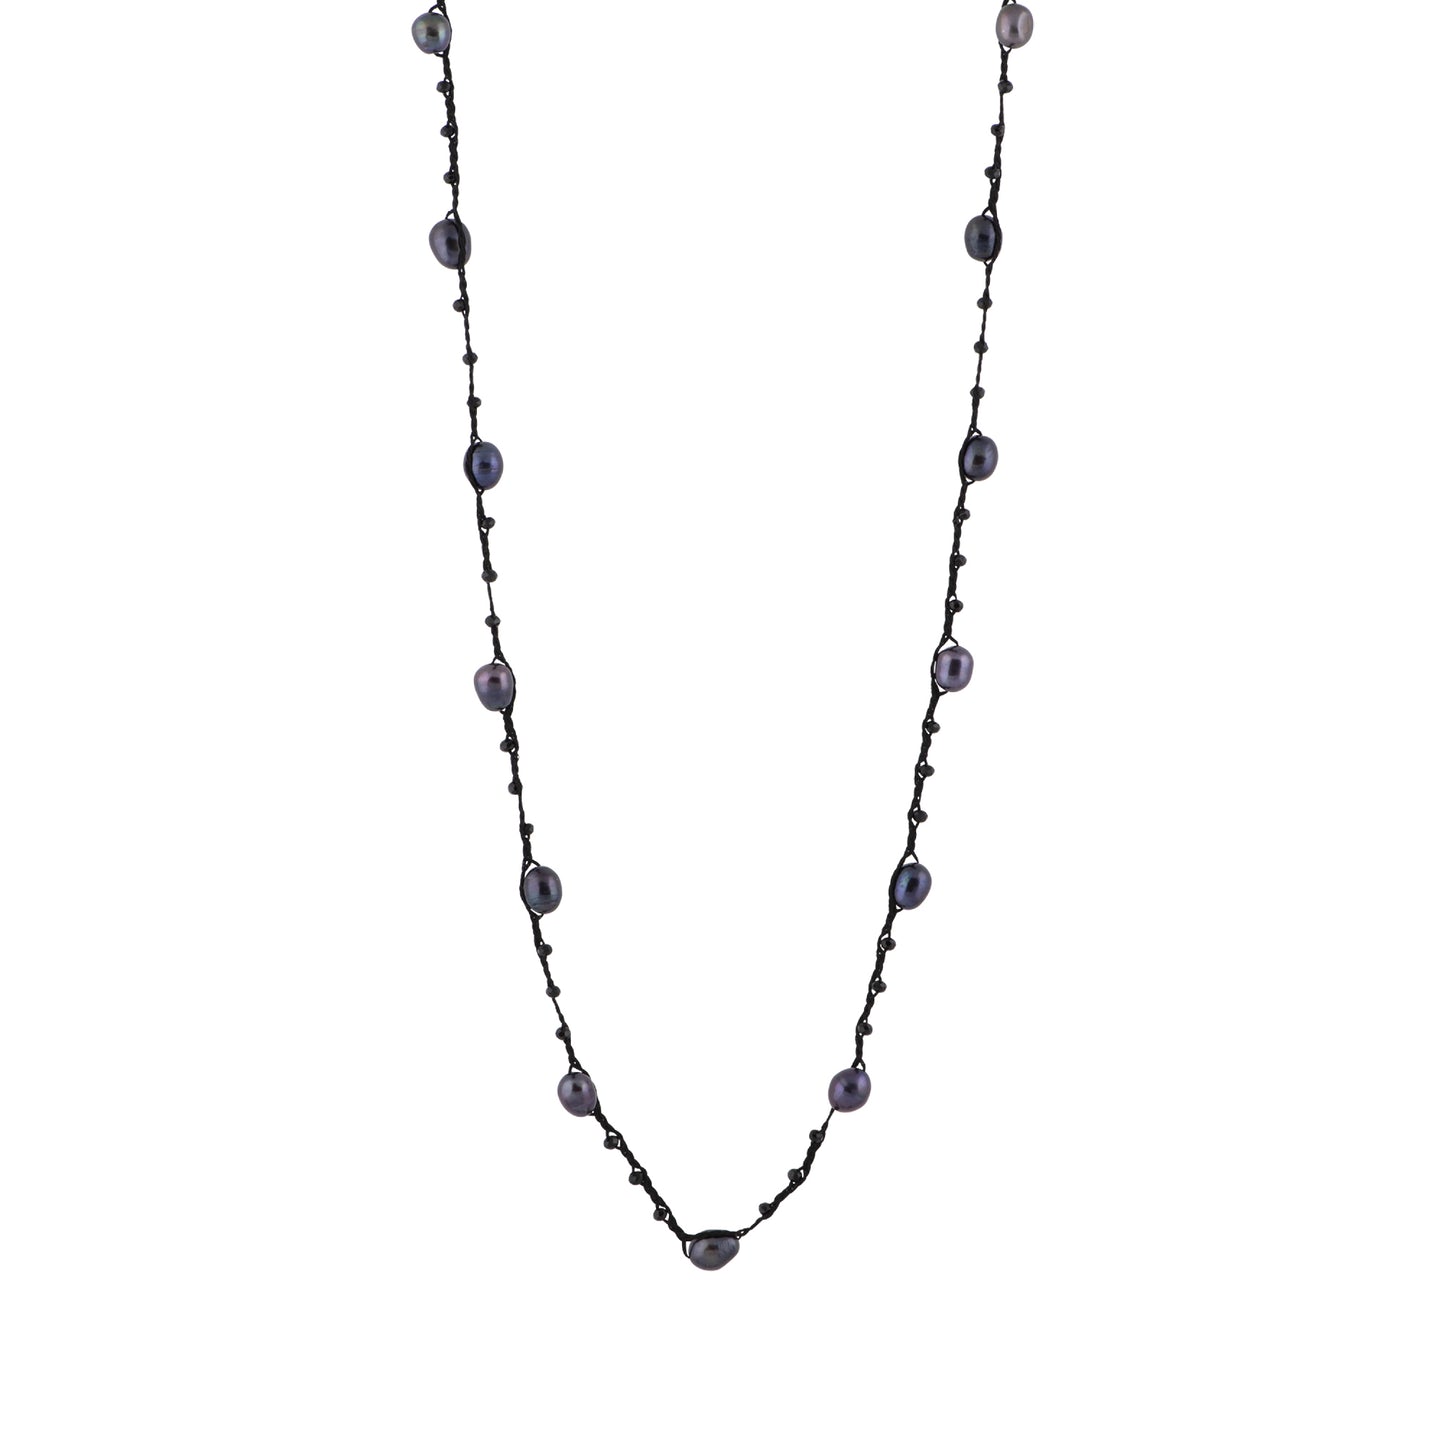 Antonia - Crochet crystal necklace with freshwater pearls (Dark grey pearls)